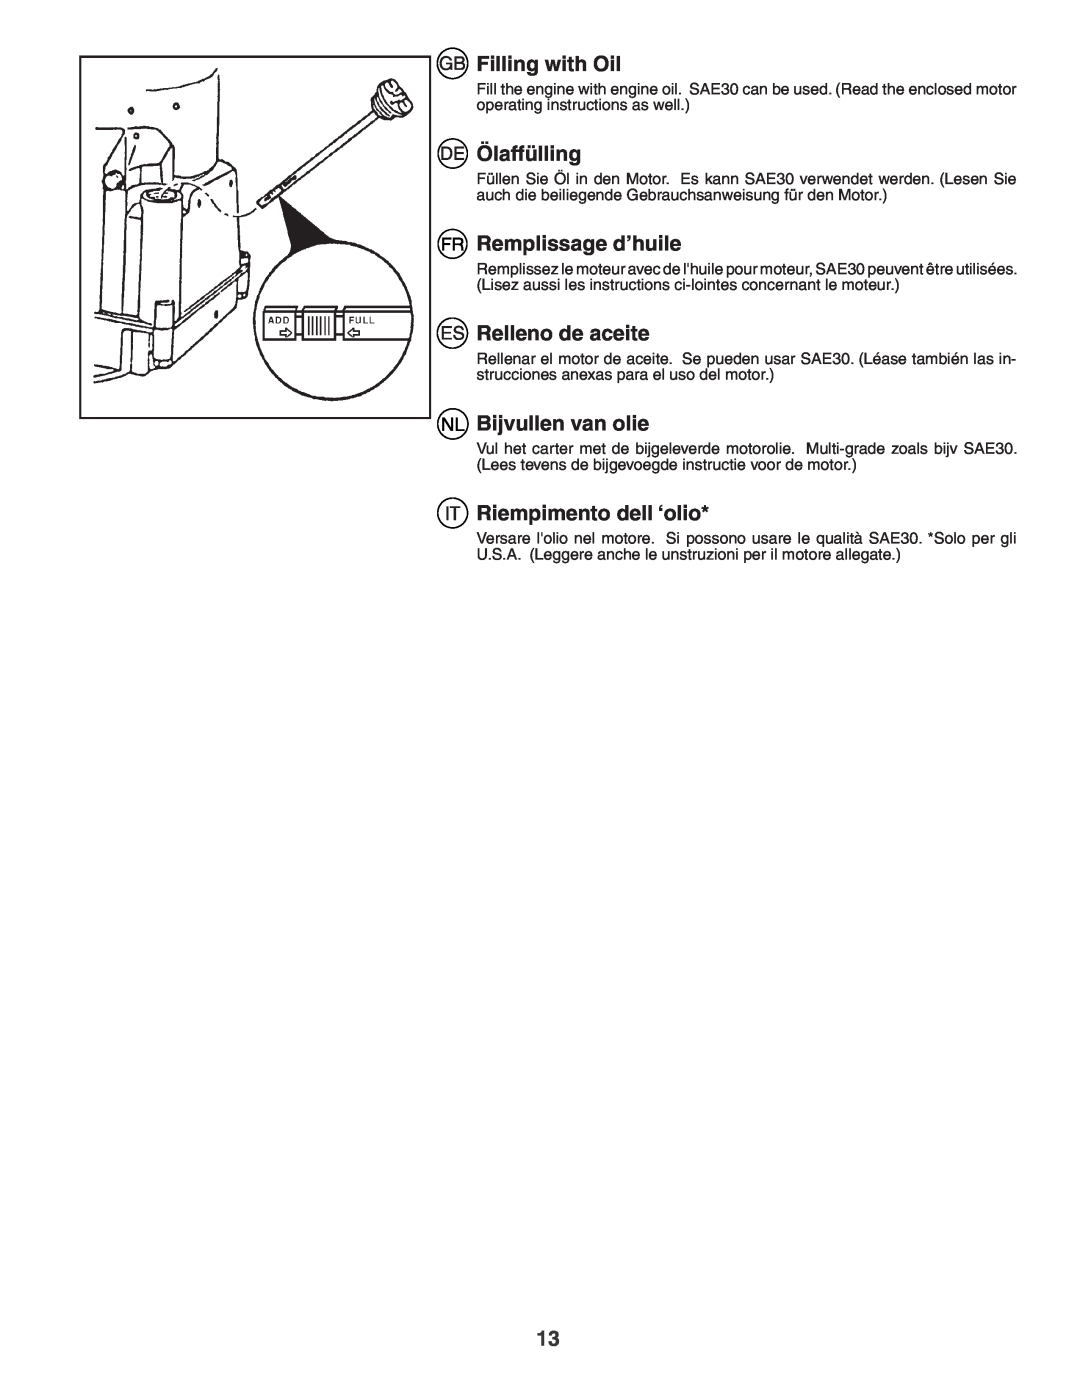 Husqvarna J50S instruction manual Filling with Oil, Ölaffülling, Remplissage d’huile, Relleno de aceite, Bijvullen van olie 